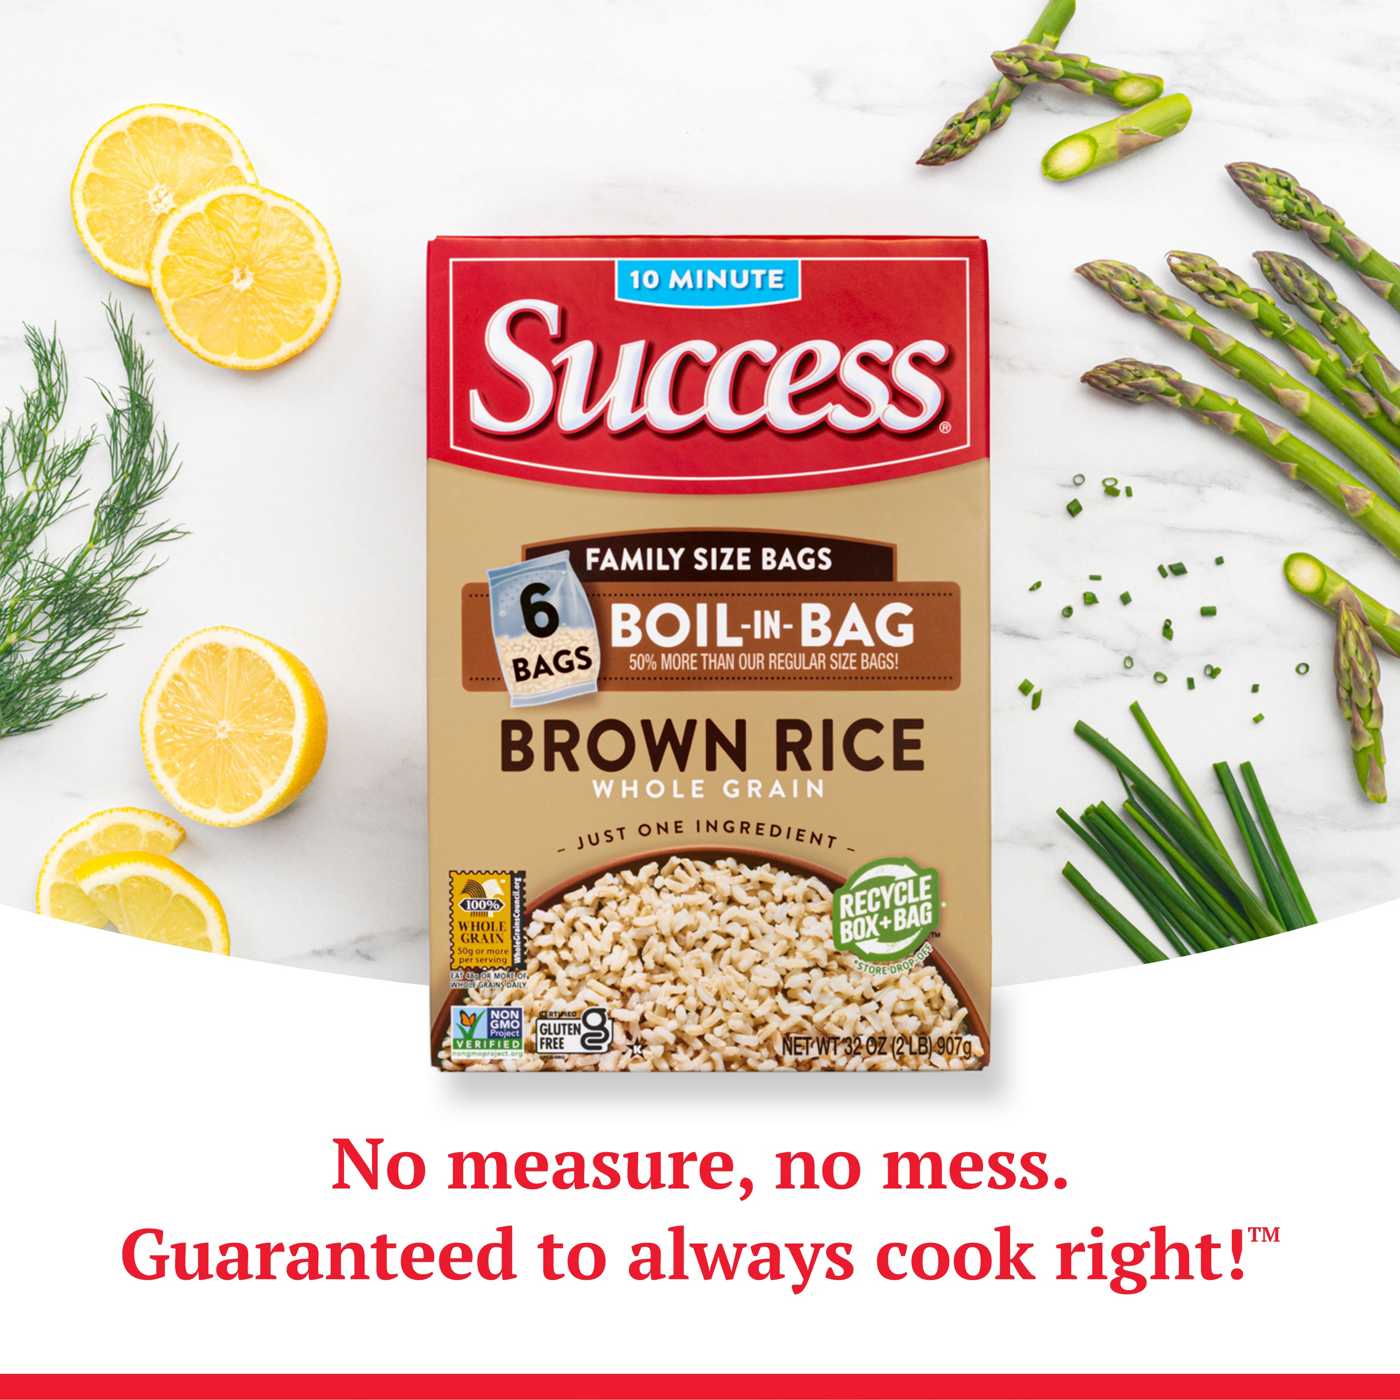 Success Boil-in-Bag Whole Grain Brown Rice; image 4 of 7